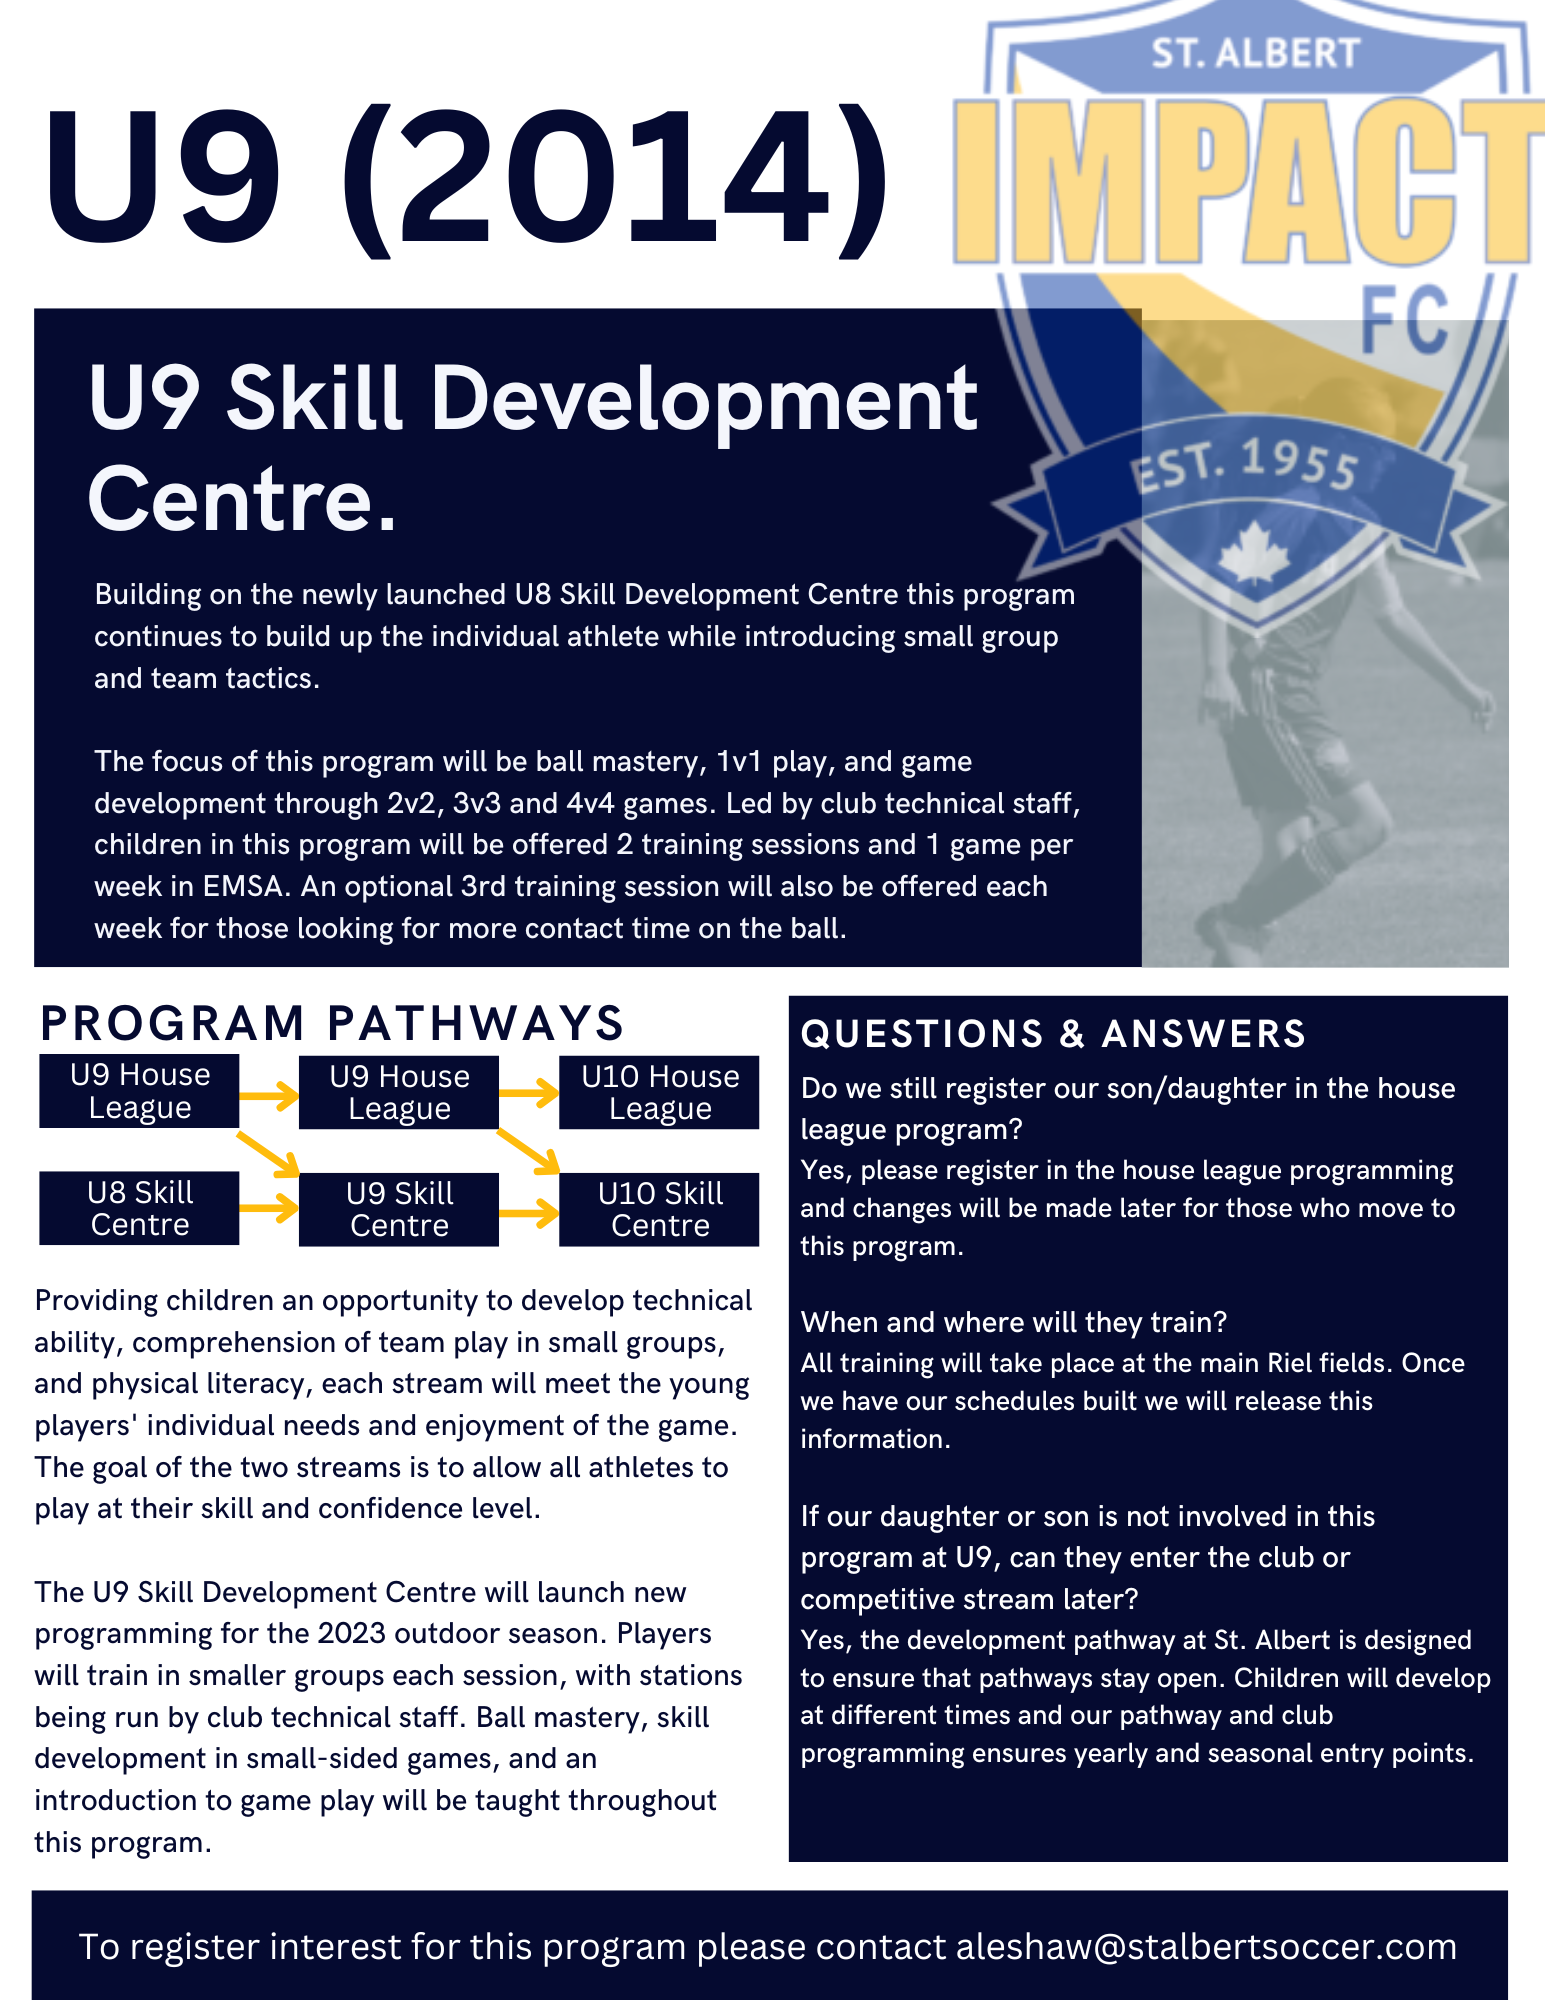 U9 Skill Development Centre Final